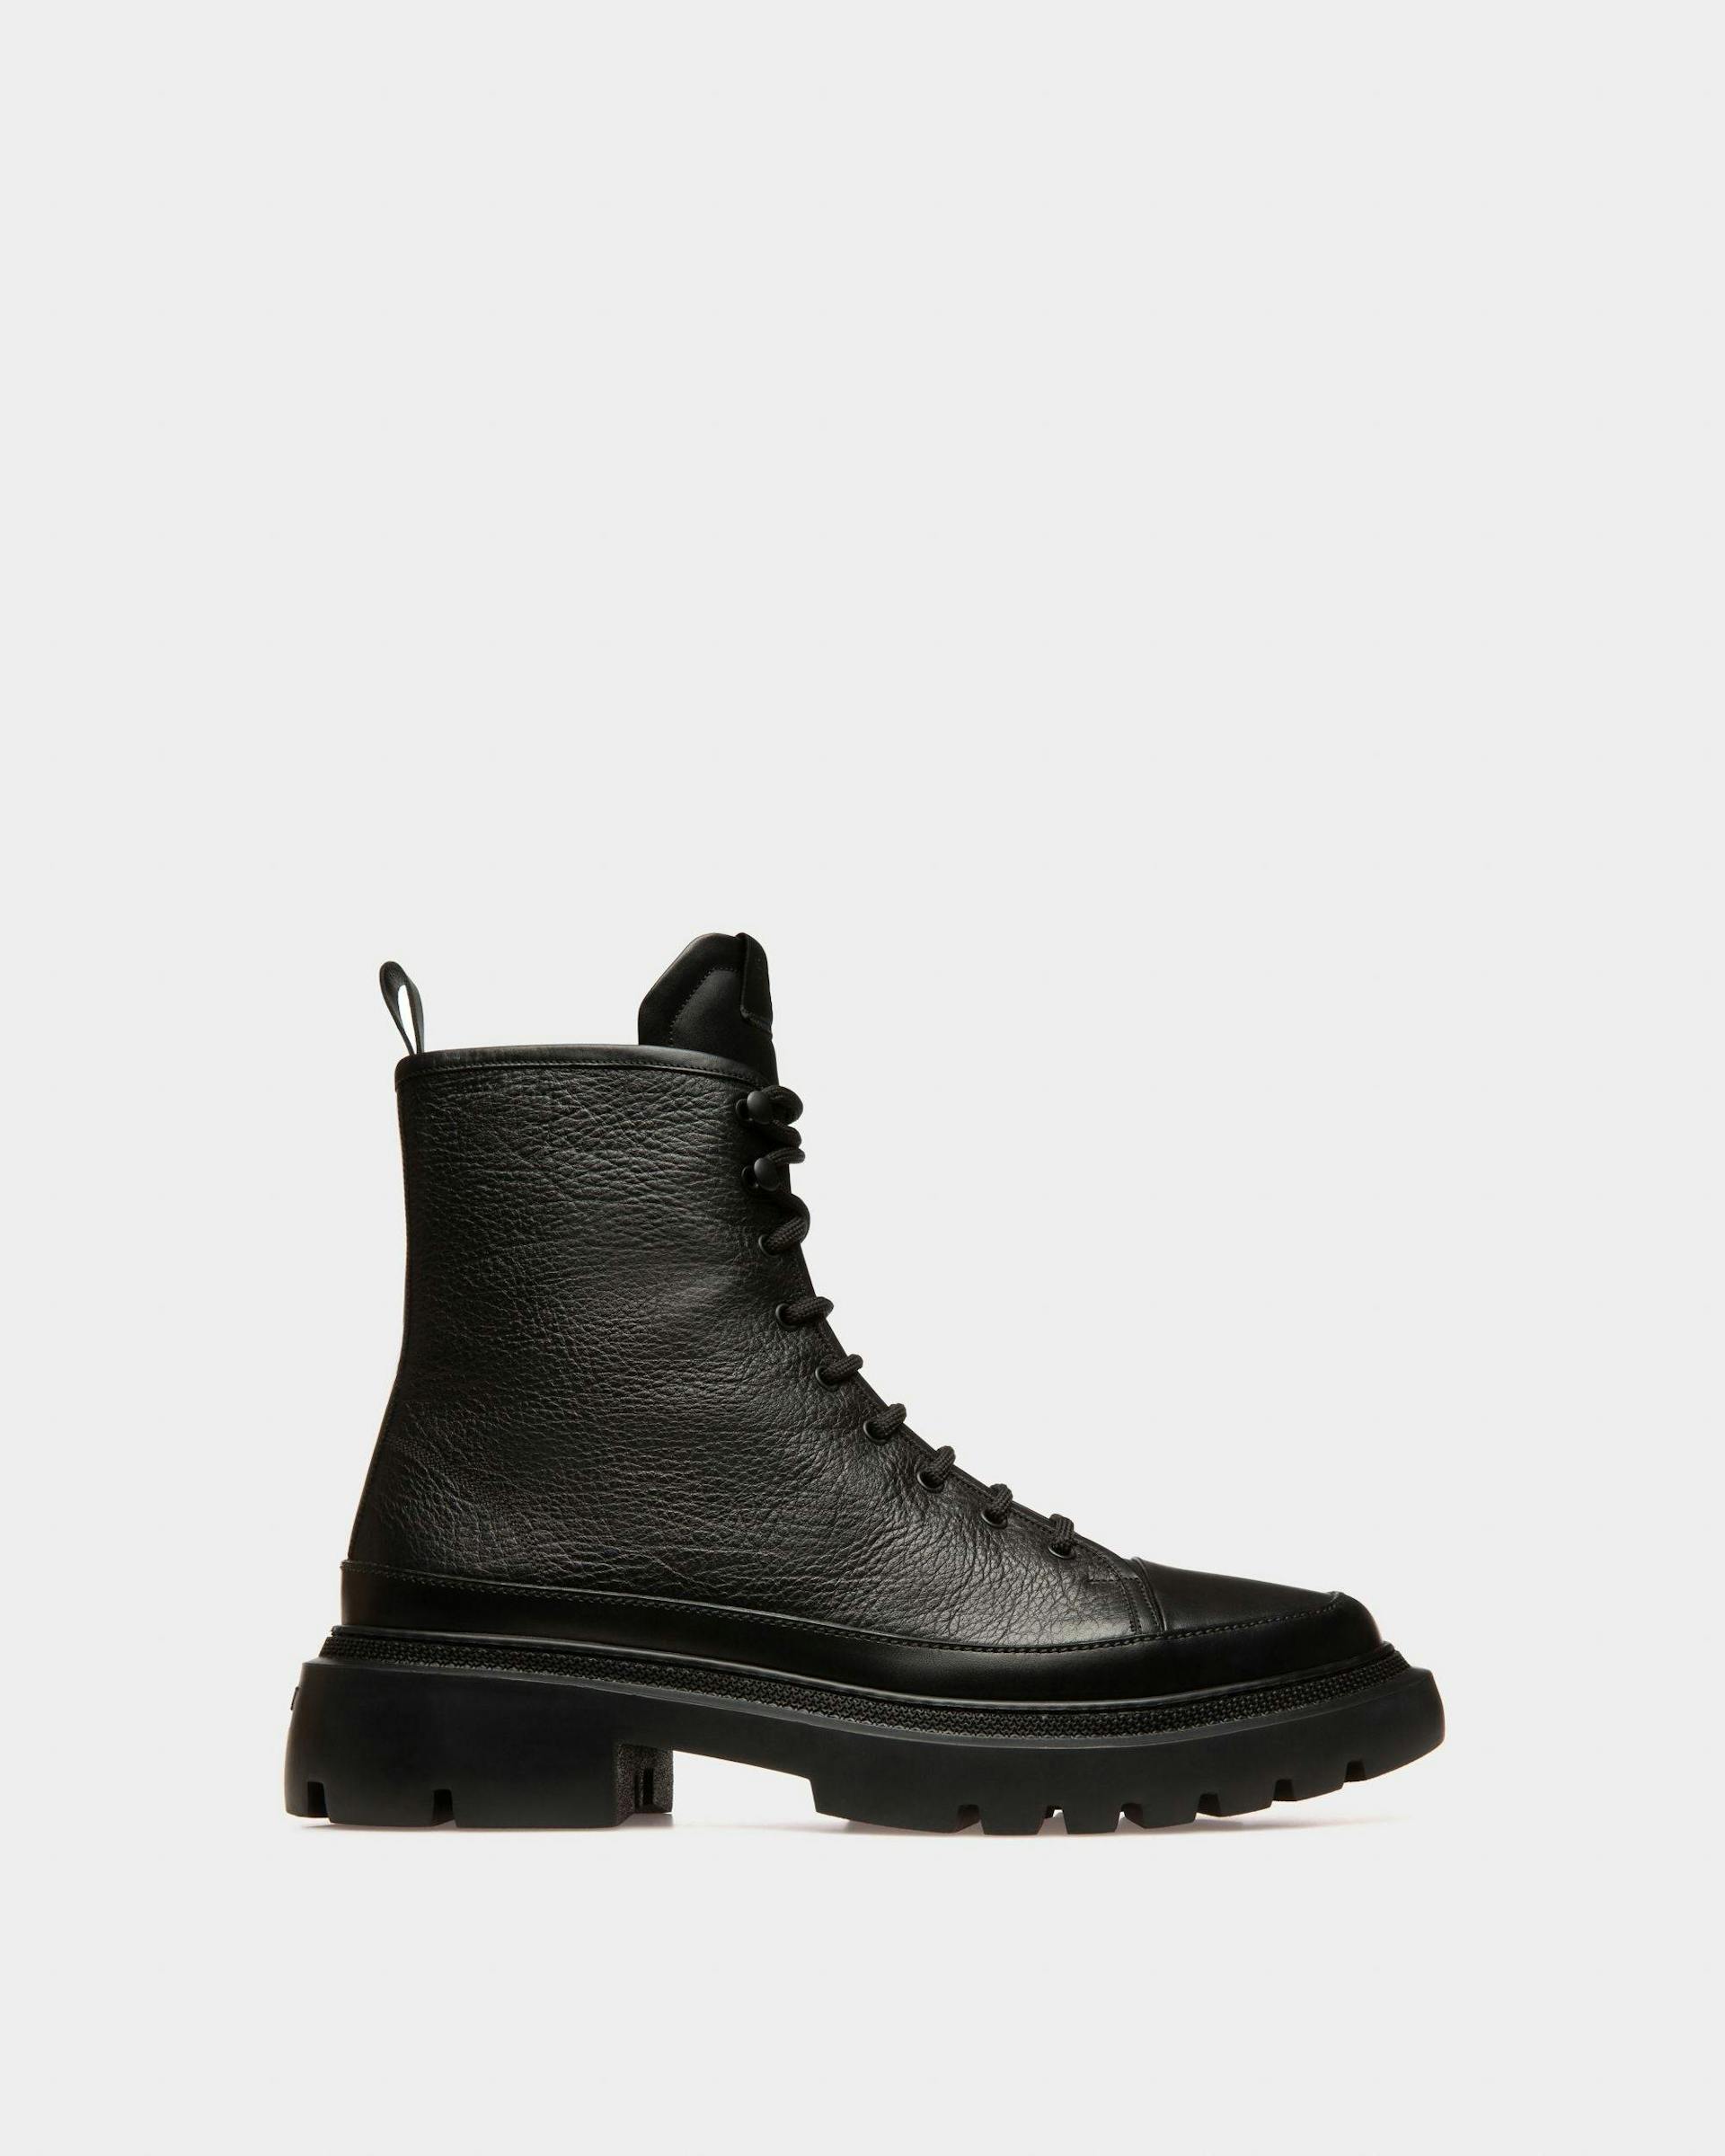 Vatiz Leather Boots In Black - Men's - Bally - 01